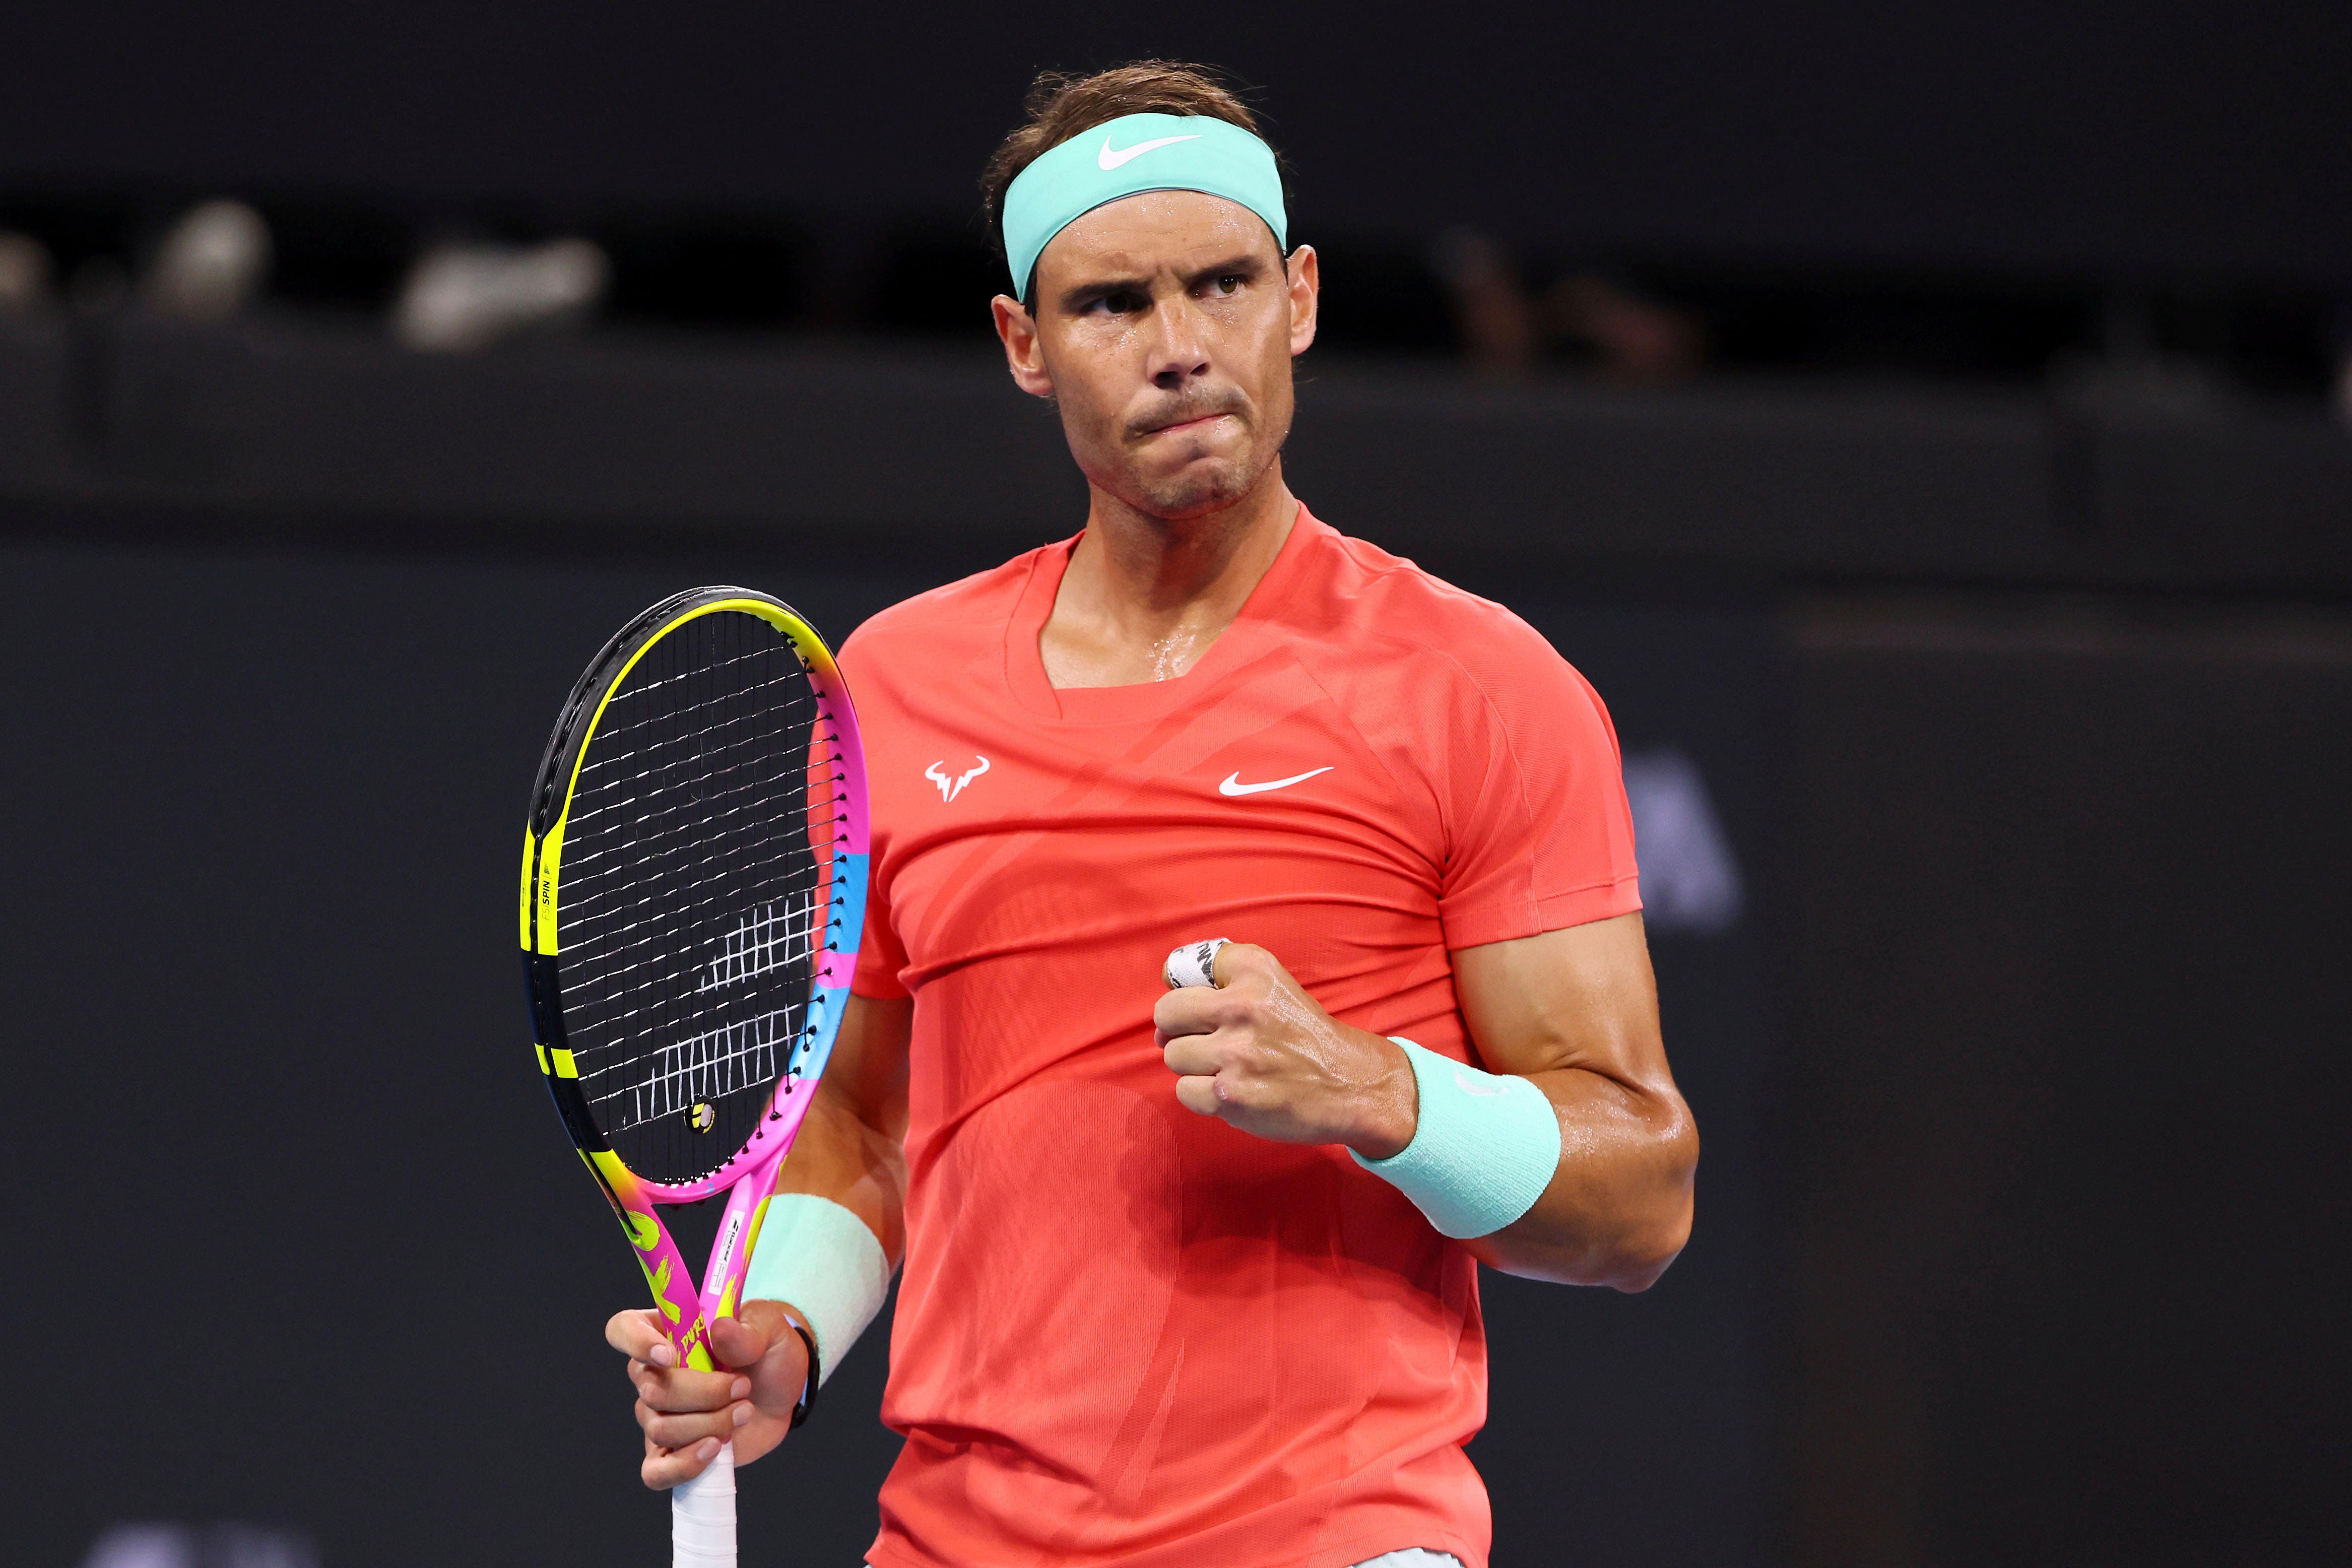 Rafael Nadal wins again on return from injury in Brisbane